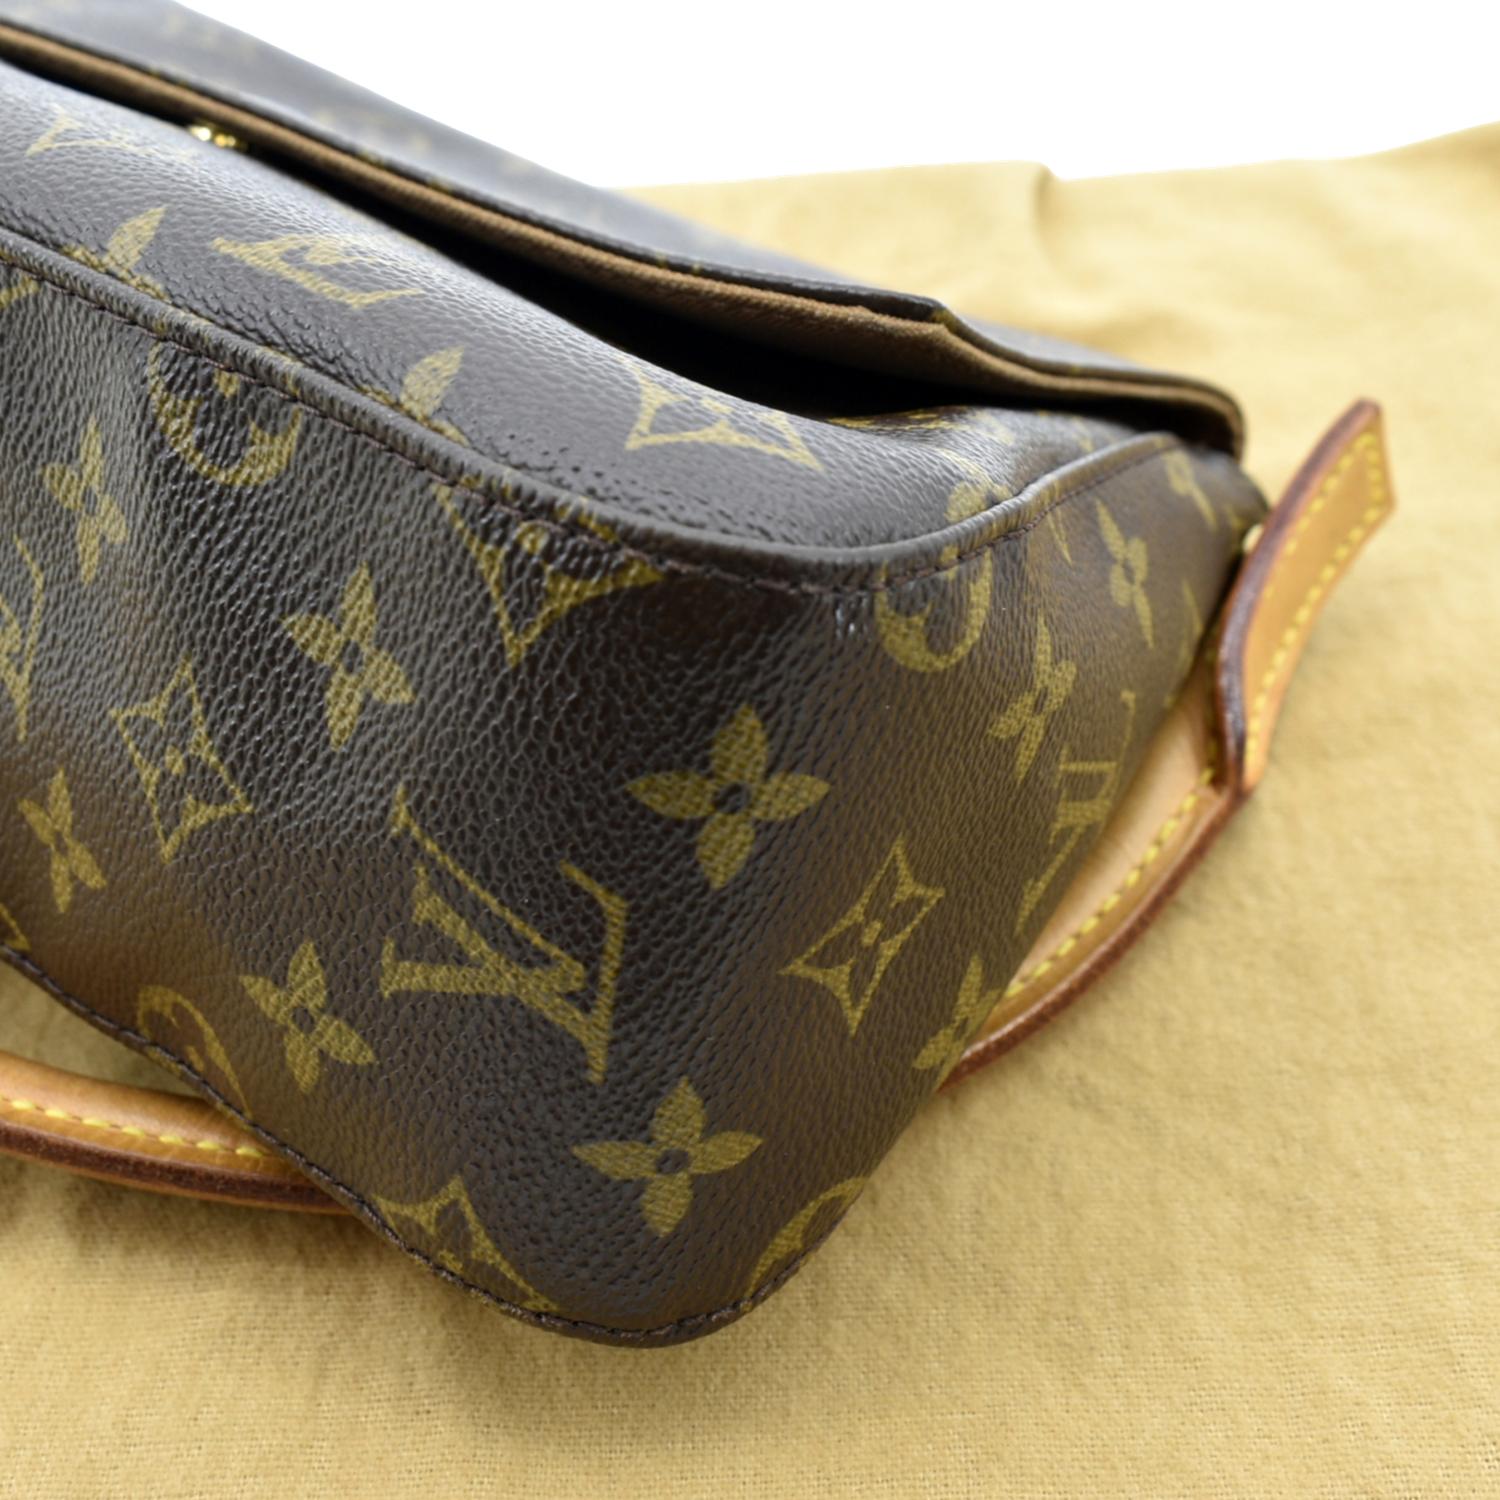 Louis Vuitton 2003 pre-owned Monogram small Looping handbag